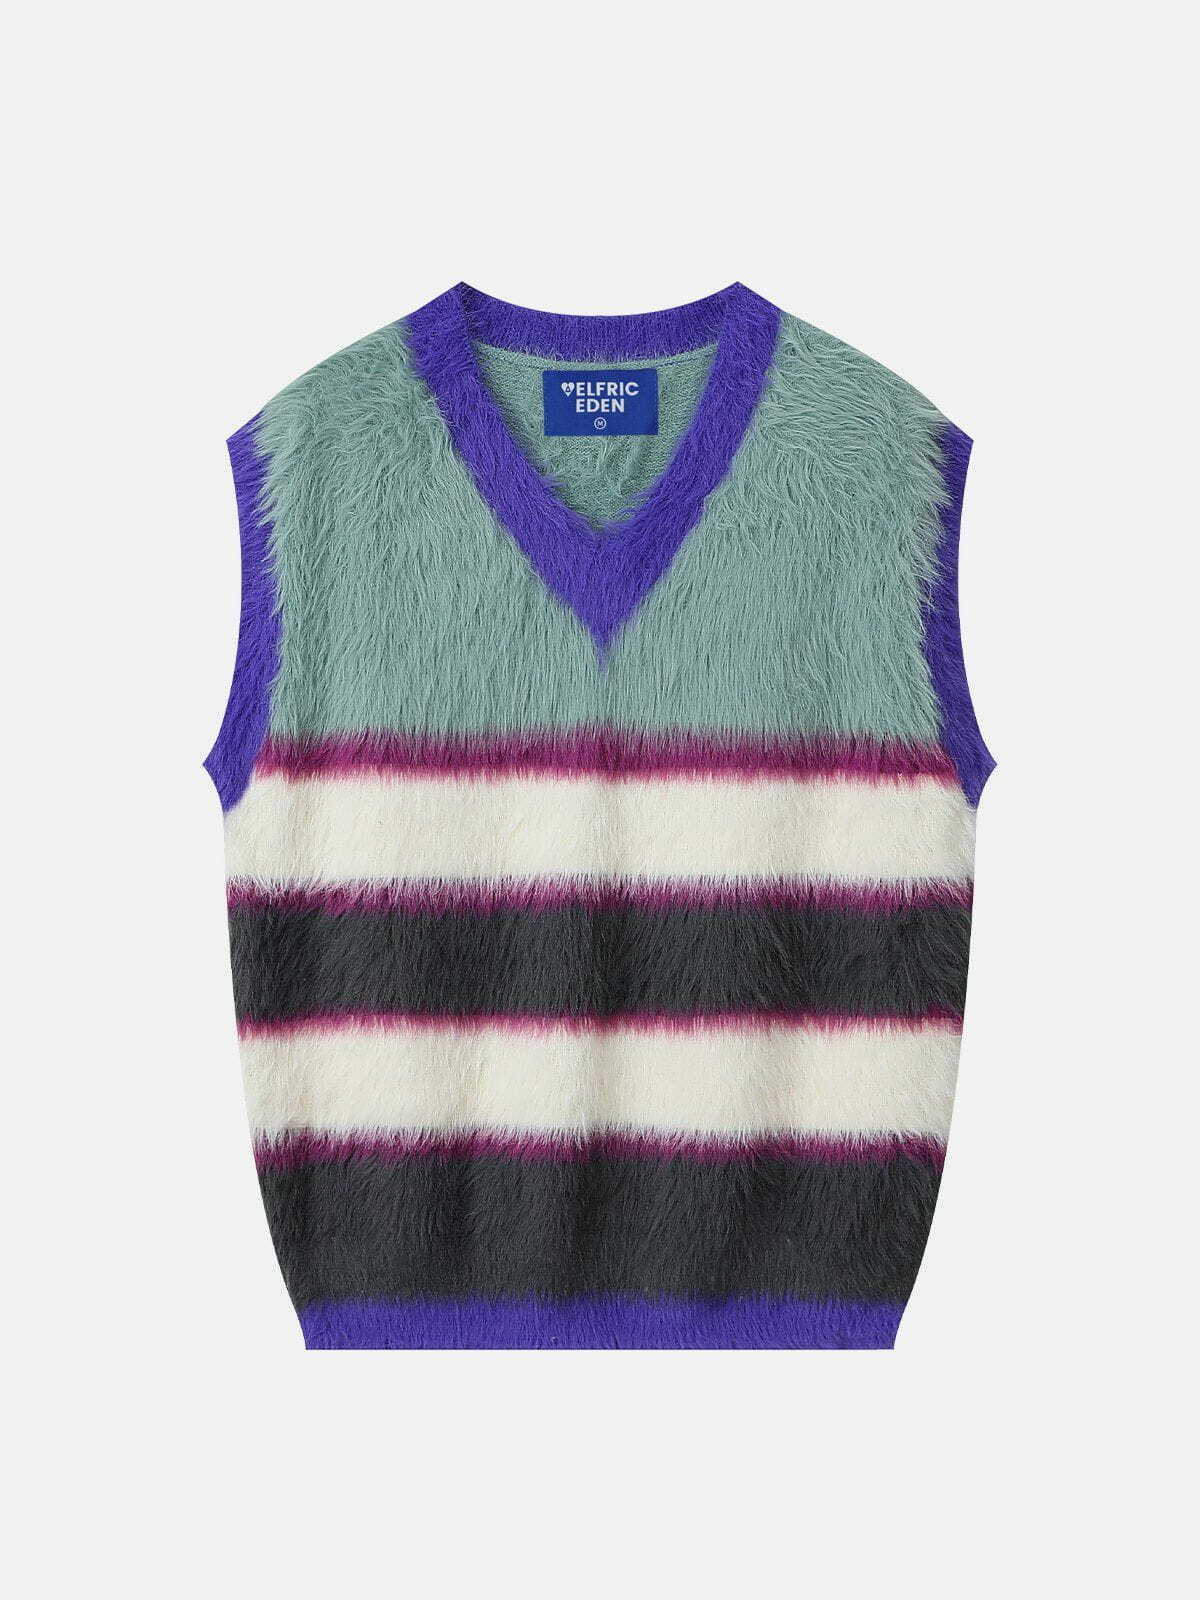 vibrant striped sweater vest 3137